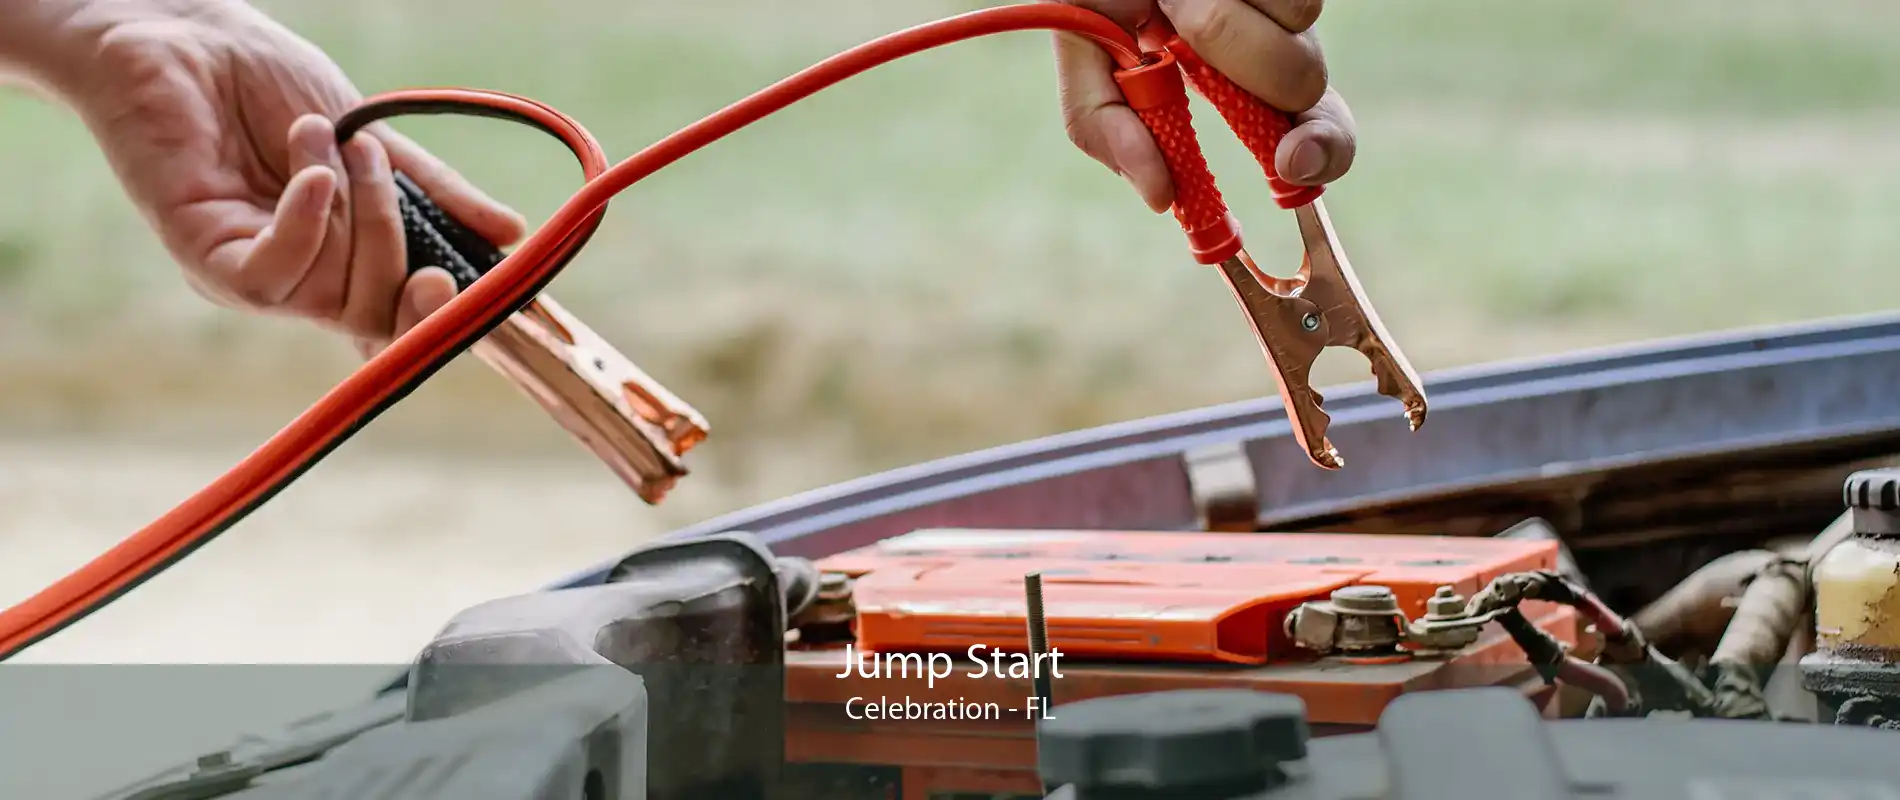 Jump Start Celebration - FL